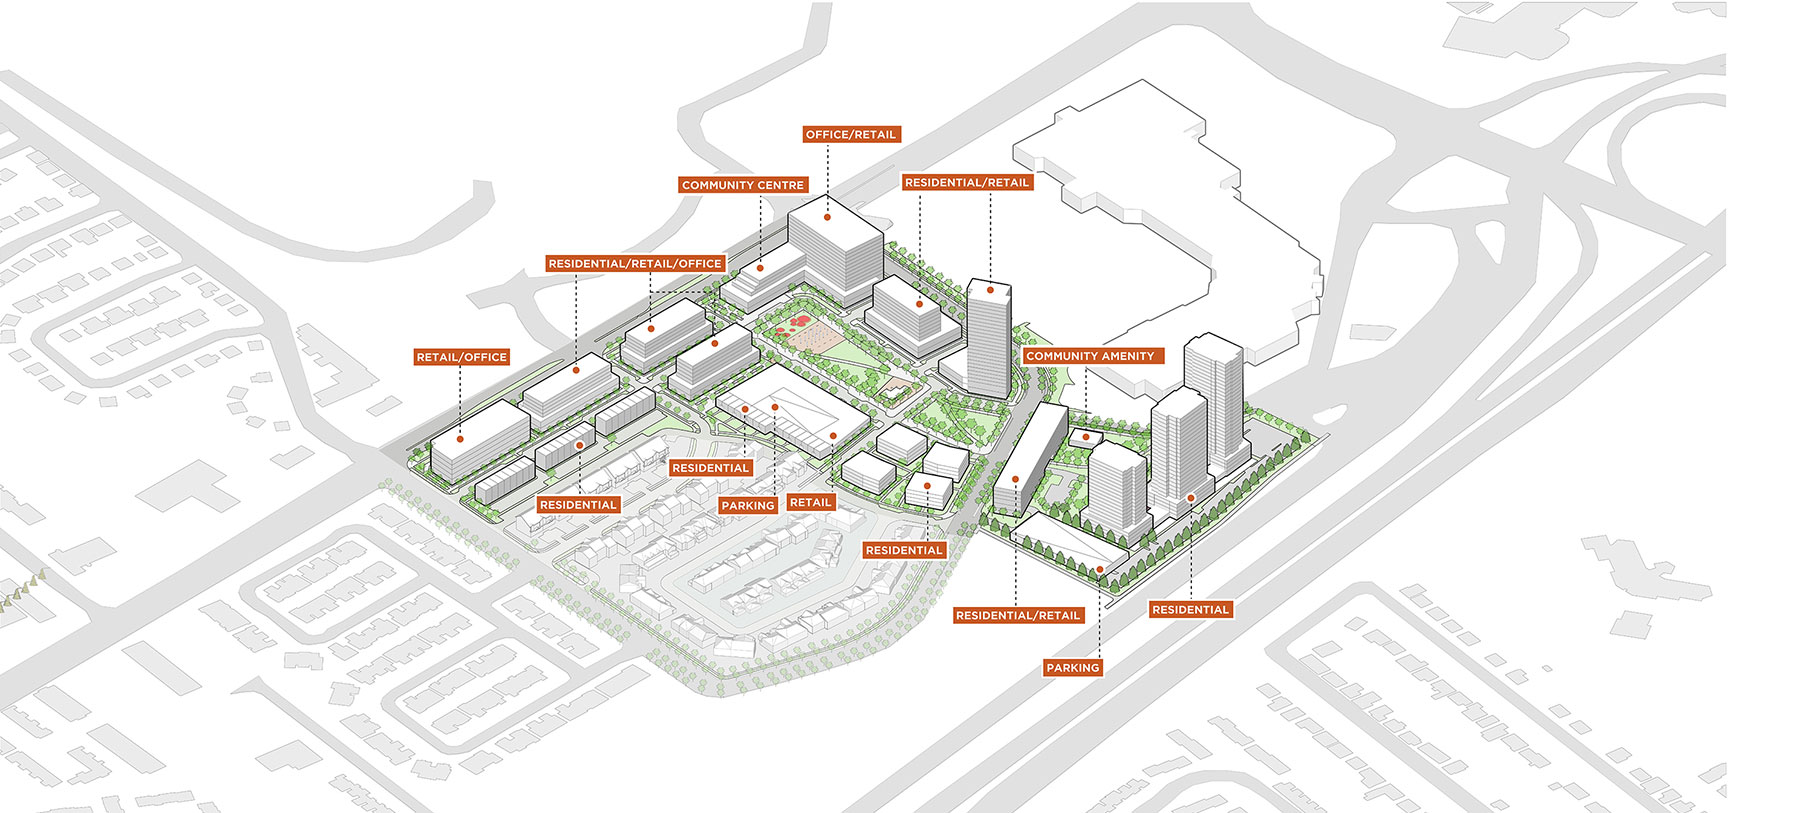 Building use diagram of City Park Master Plan.